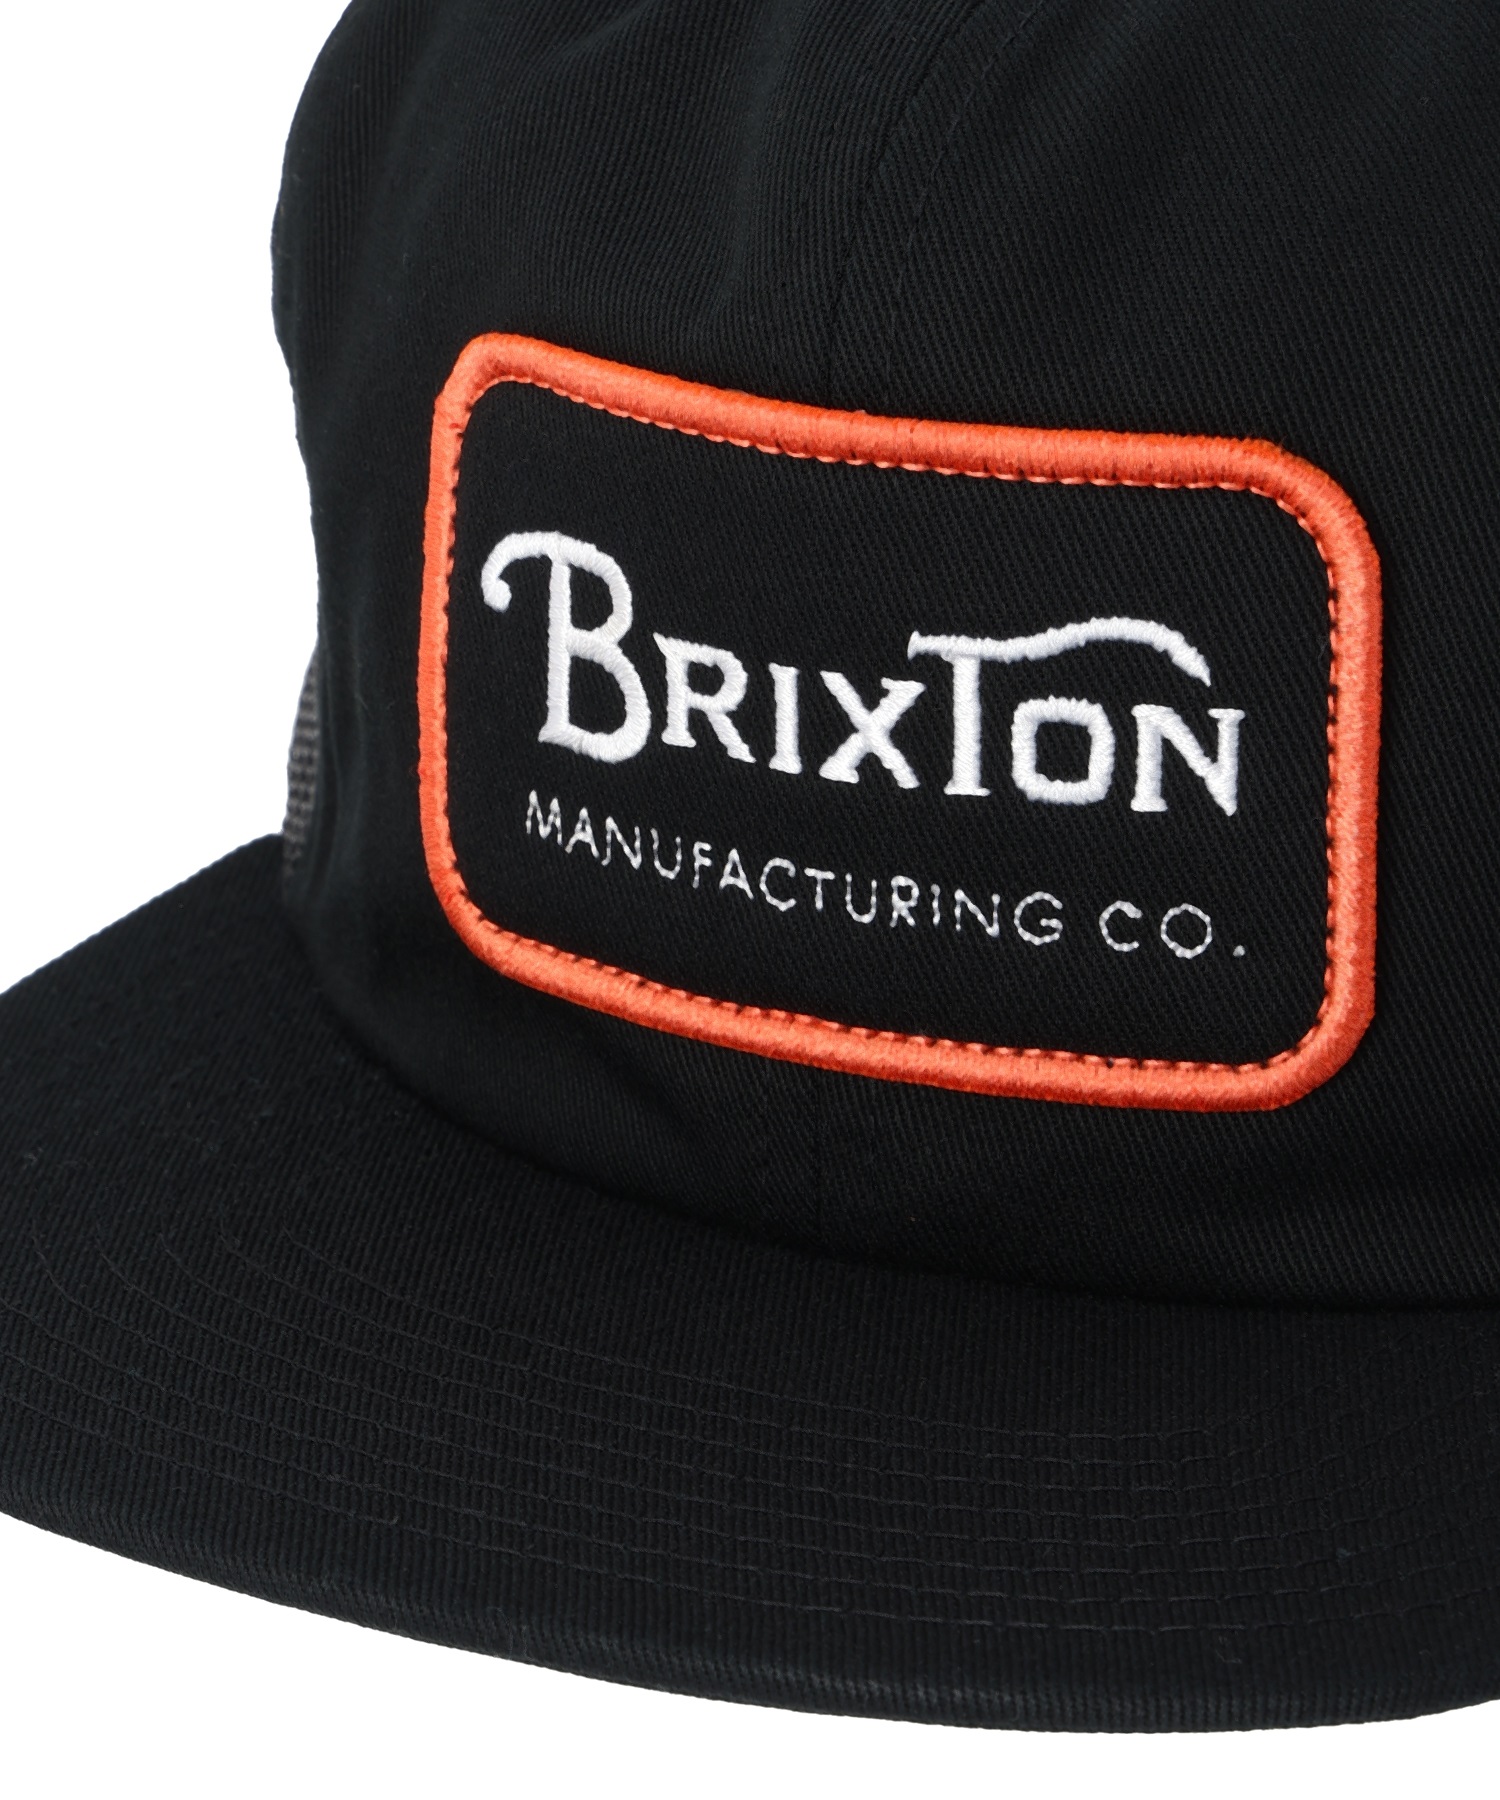 BRIXTON/ブリクストン GRADE HP TRUCKER HAT 11645 キャップ(TKGTG-F)